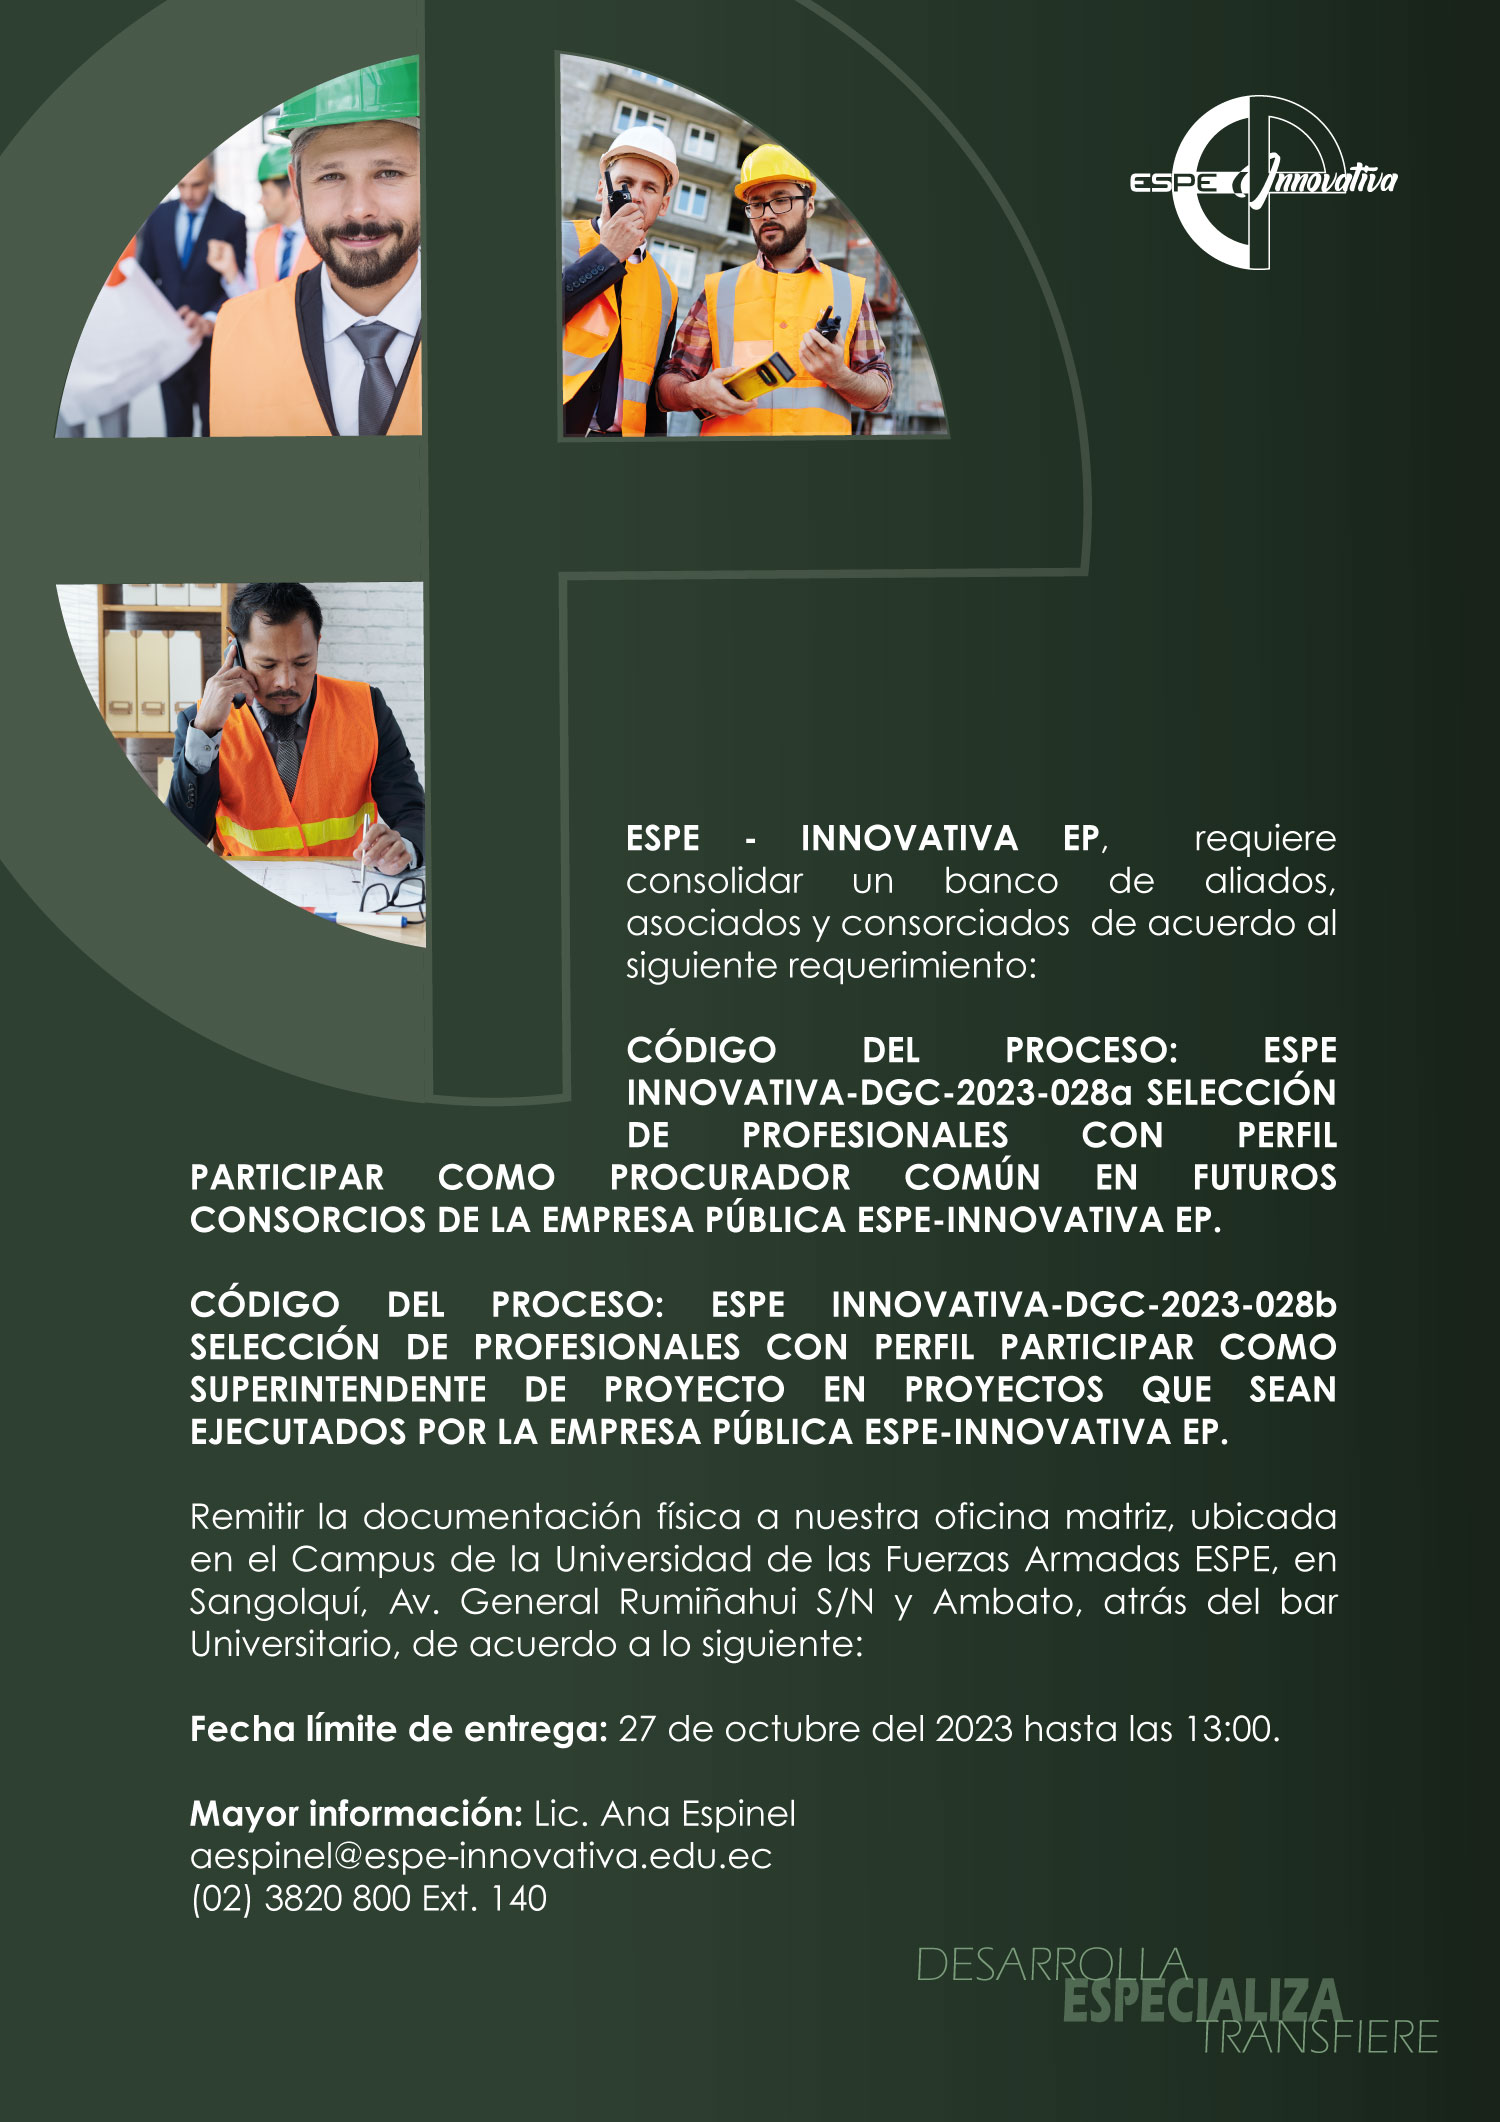 CÓDIGO DE PROCESO: ESPE-INNOVATIVA-DGC-2023-028   PROFESIONALES PROCURADOR COMÚN / SUPERINTENDENETE DE PROYECTO